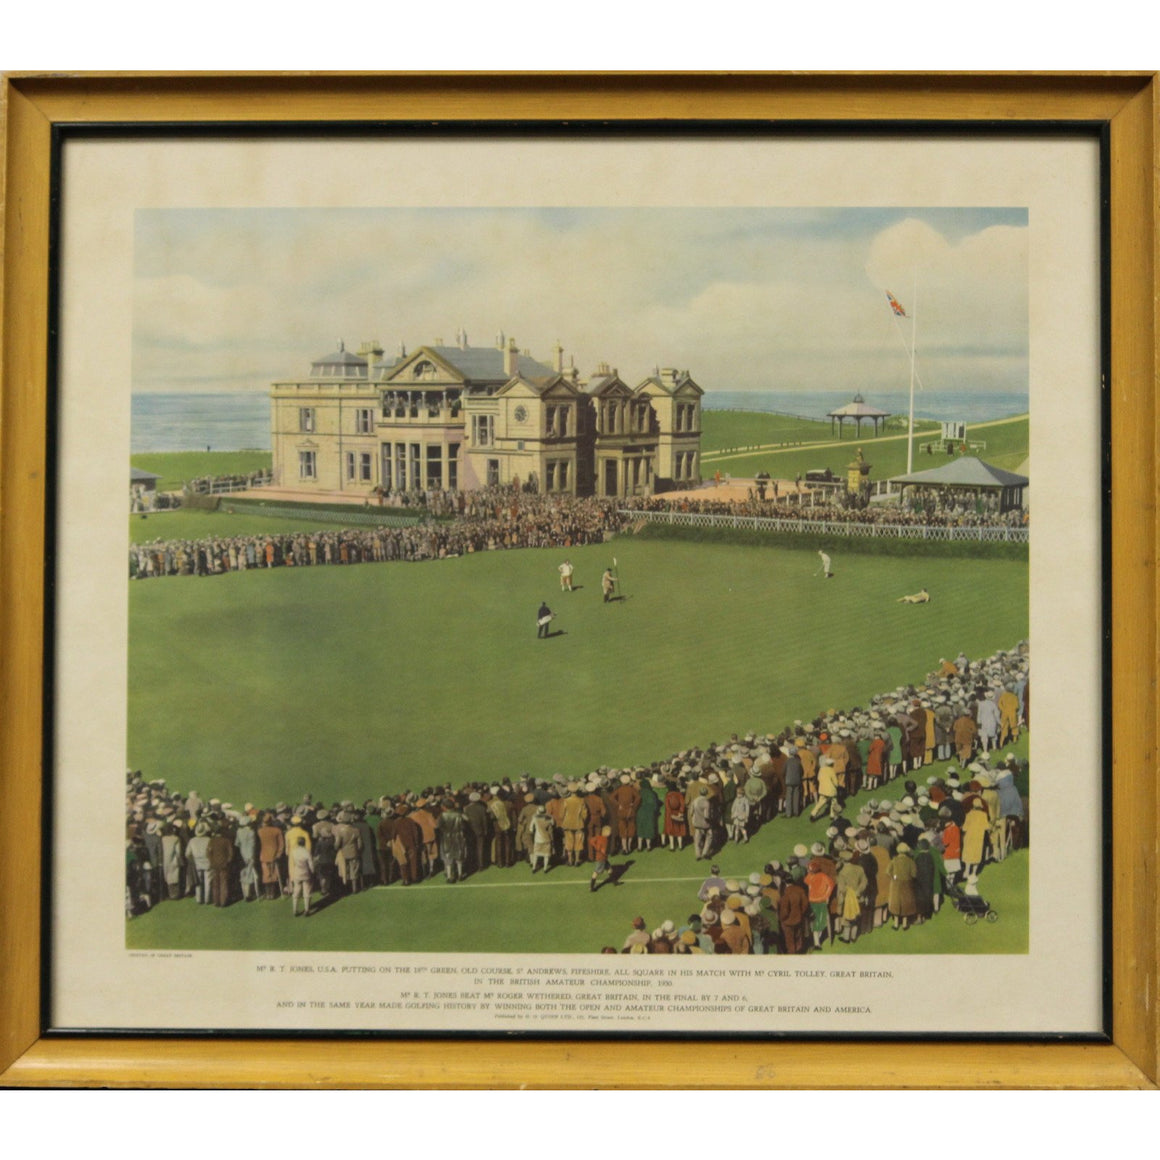 British Amateur Championship 1930